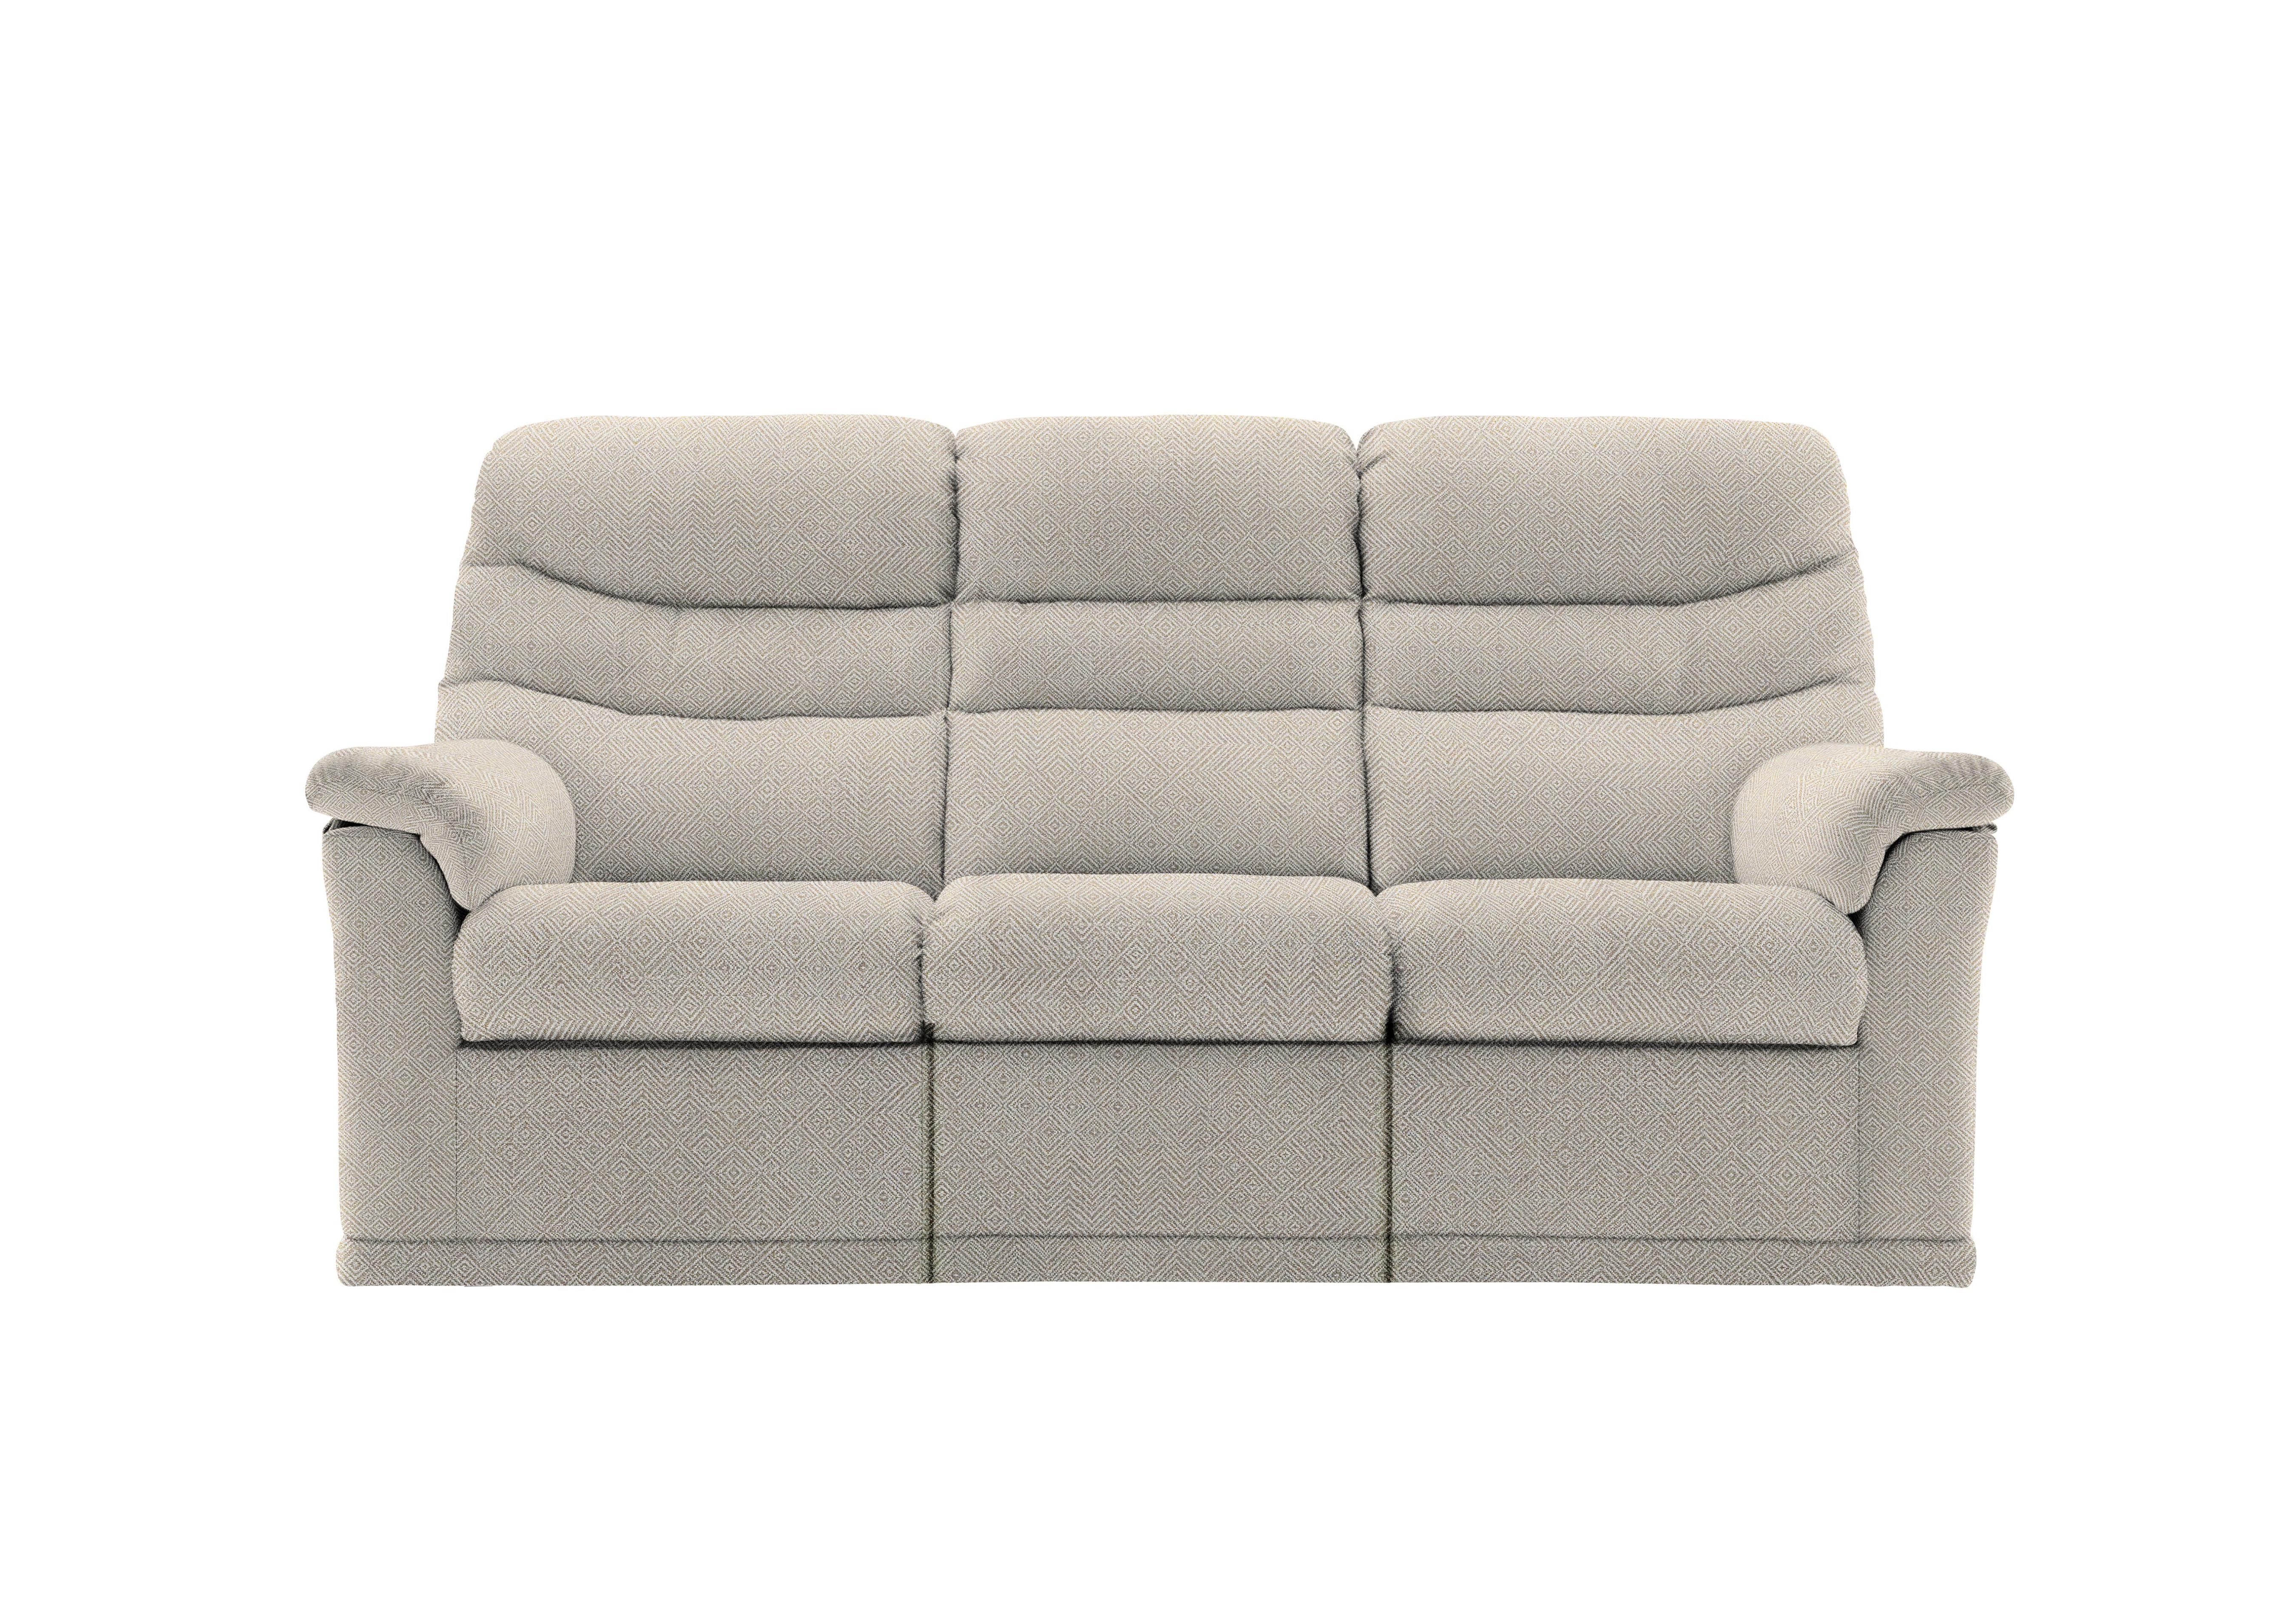 Malvern 3 Seater Fabric Sofa in B011 Nebular Blush on Furniture Village